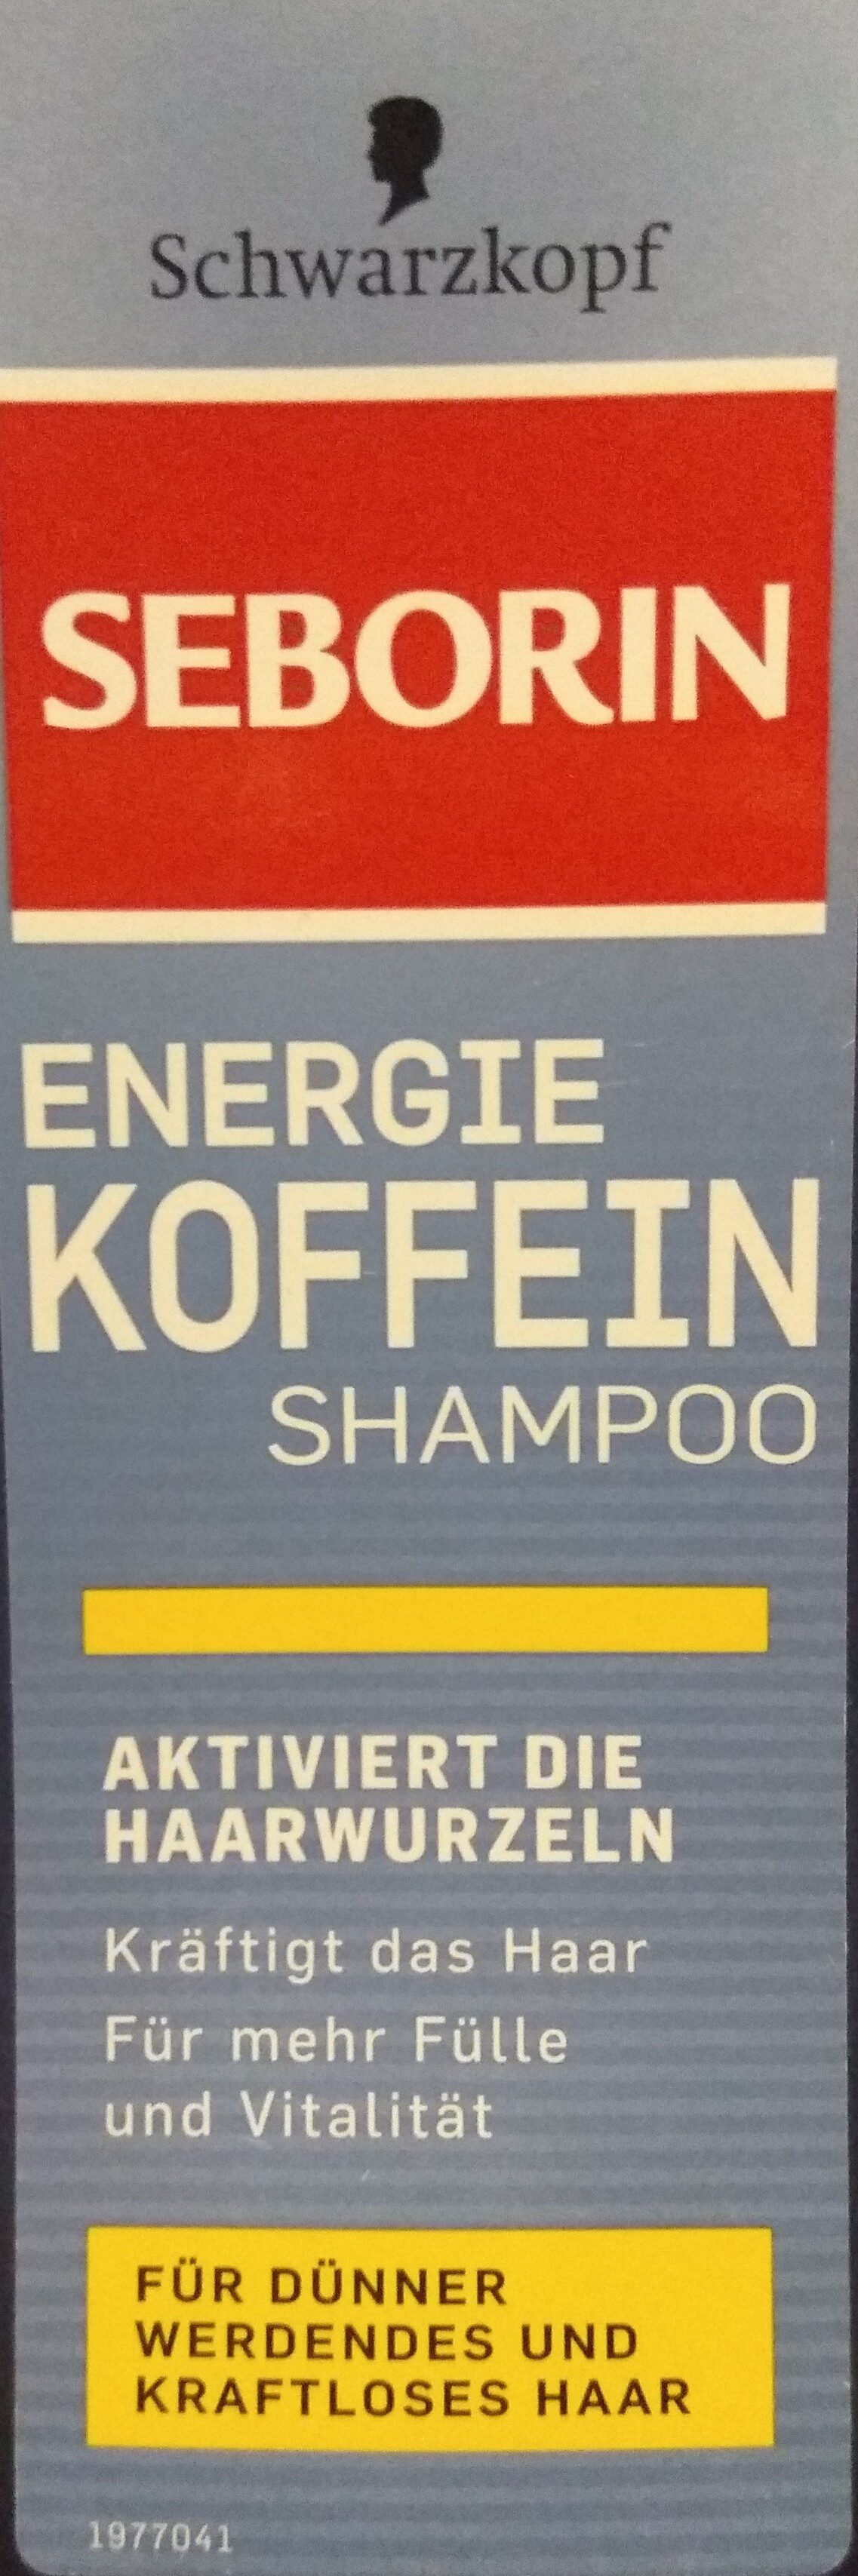 Energie Koffein Shampoo - Product - de